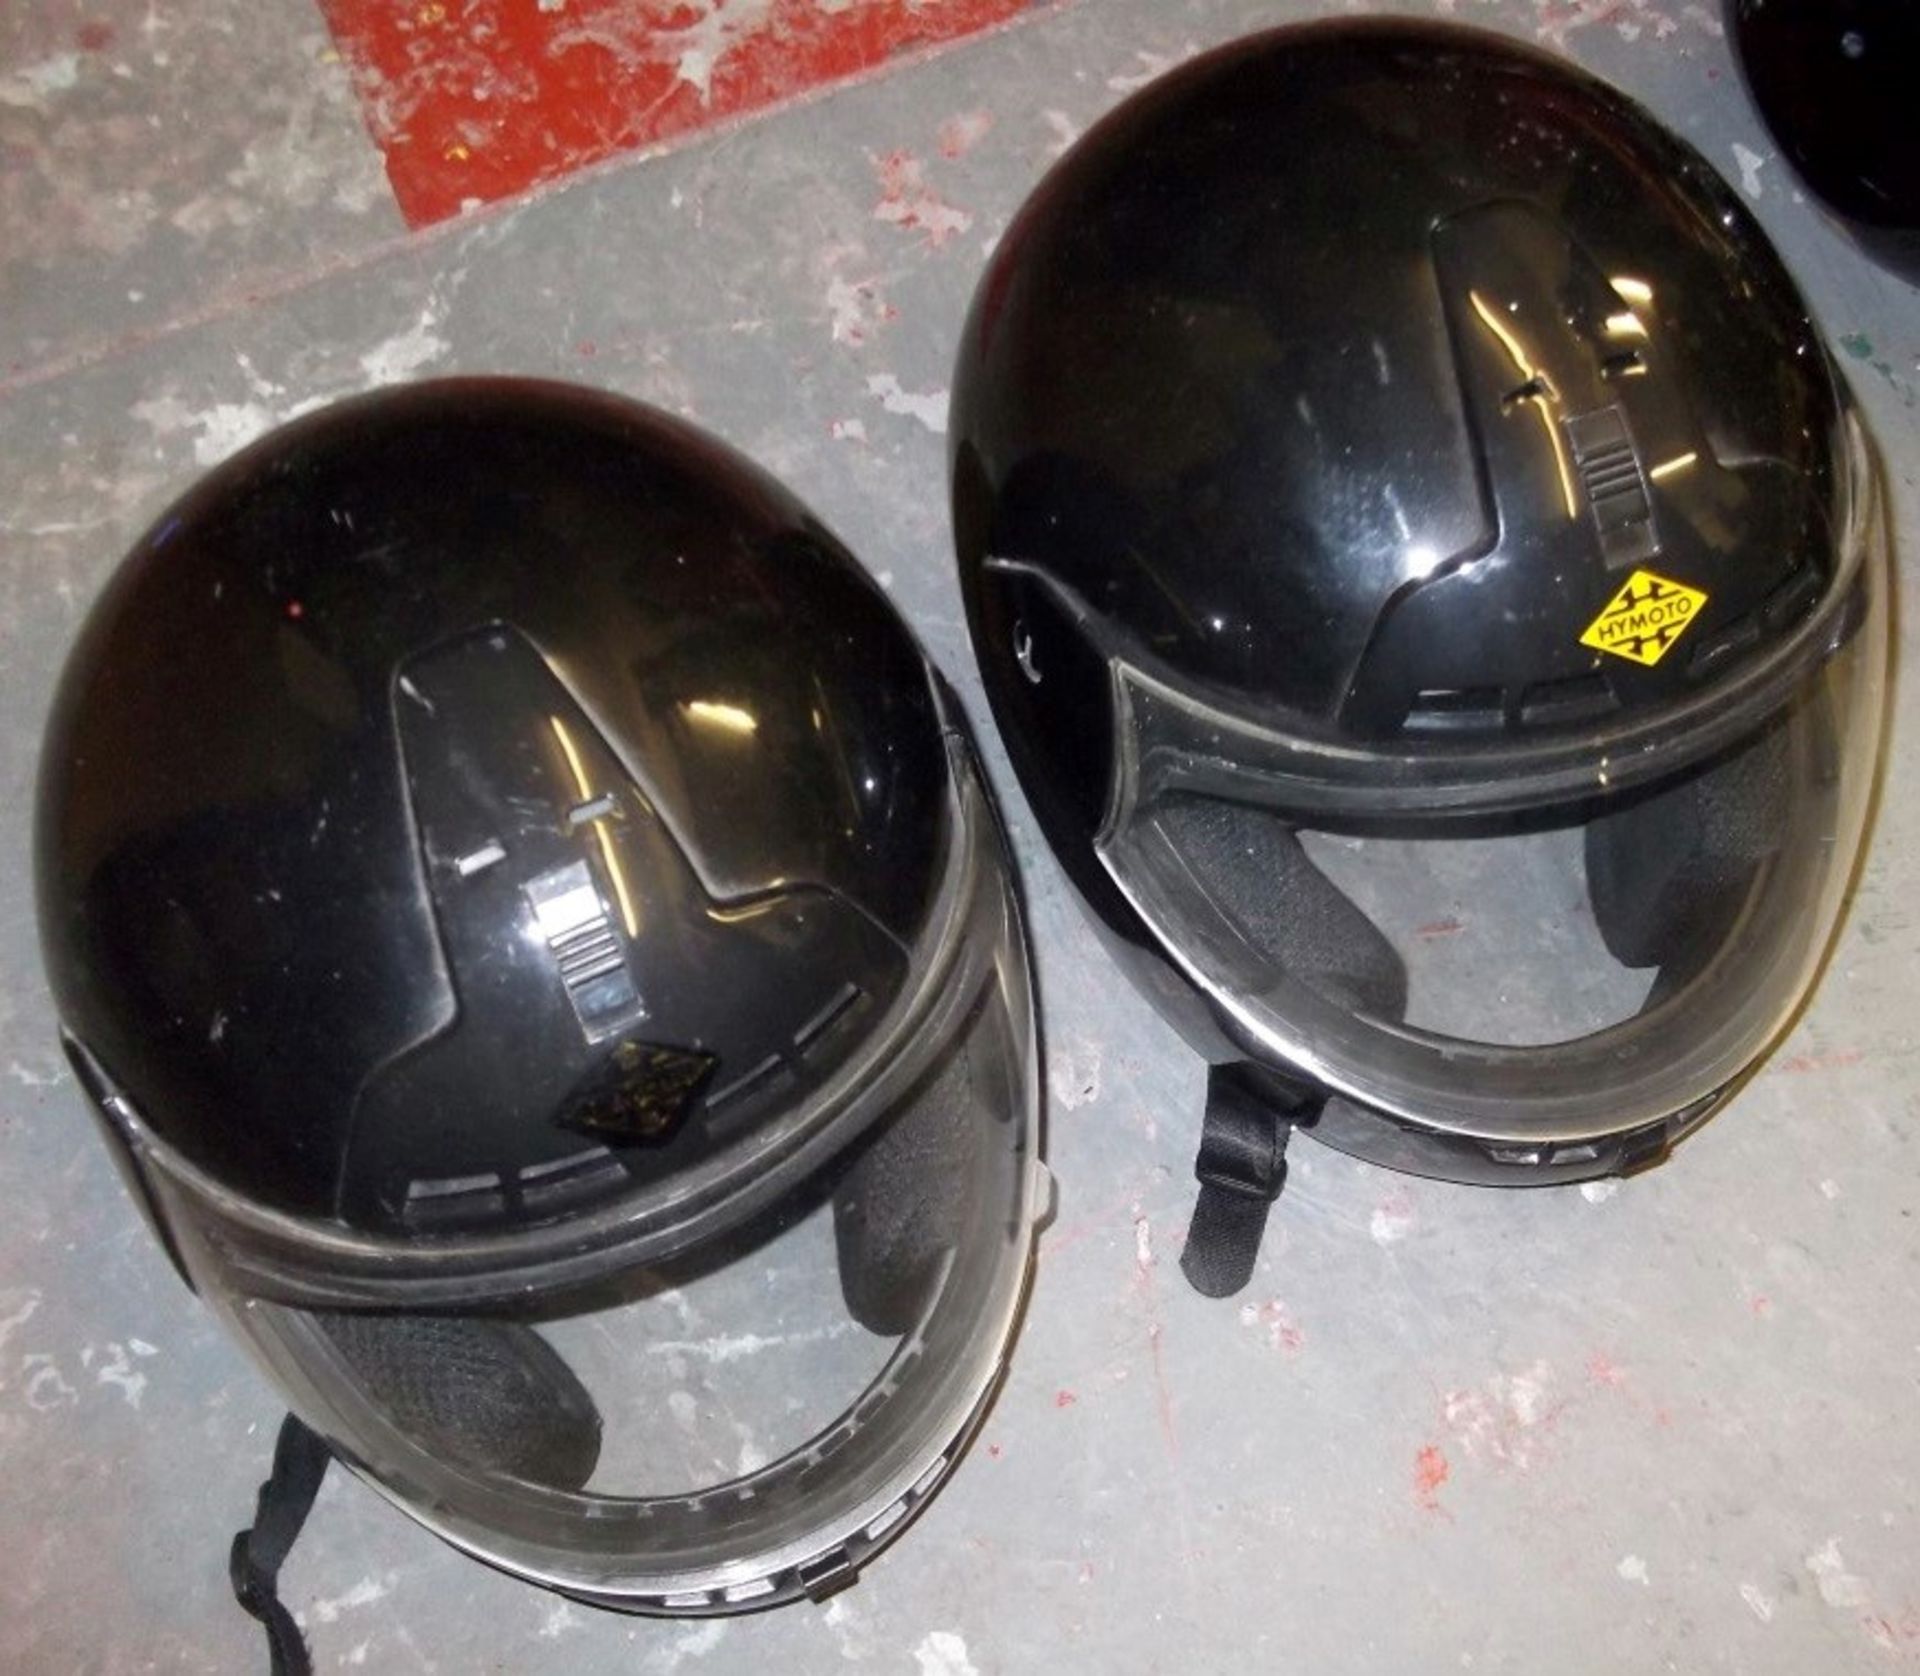 2 x Custom Painted Motorcycle Helmets - Both Medium Adult - Pre-loved, In Good Condition - Each - Image 4 of 4